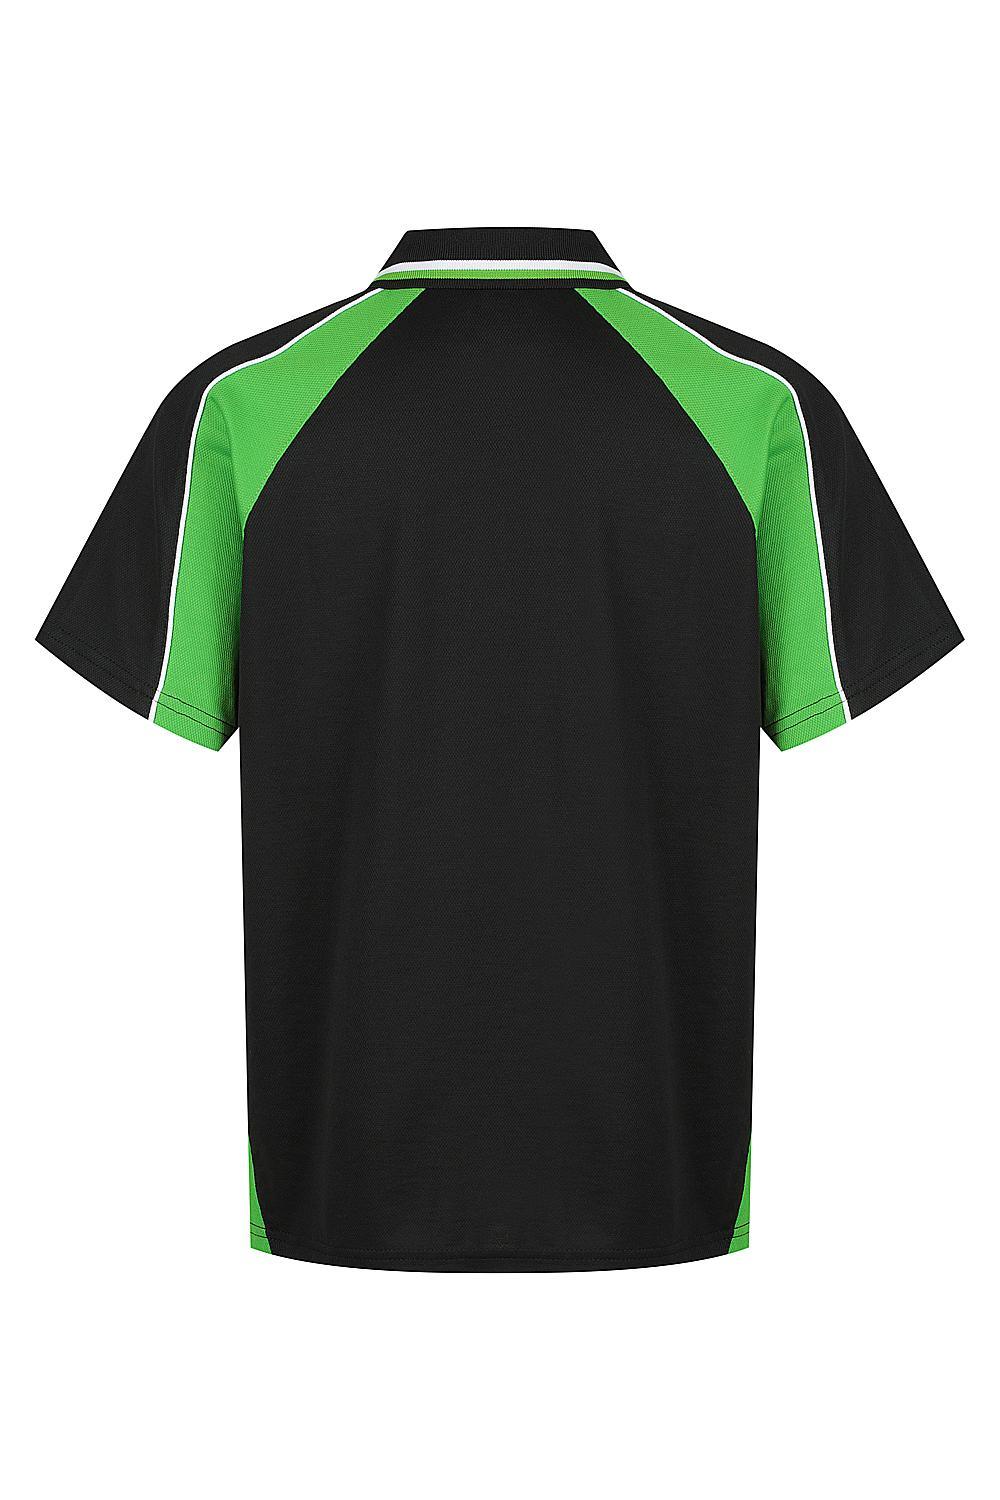 Custom Panorama Kids Shirt - Black/Green/White - Back